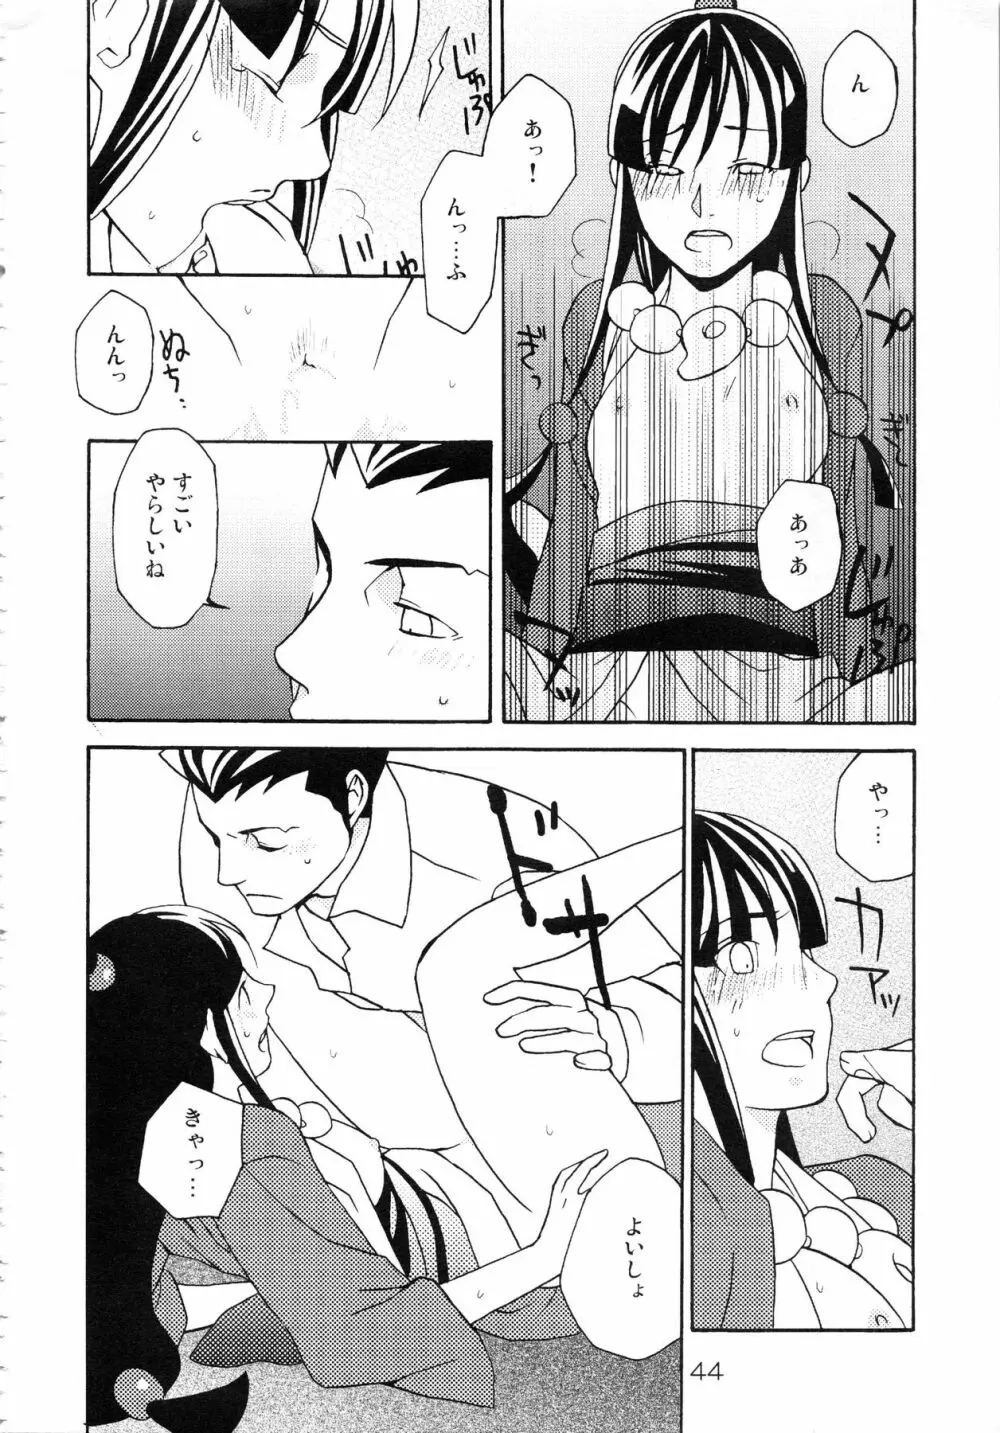 NARUMAYO R-18 - page43